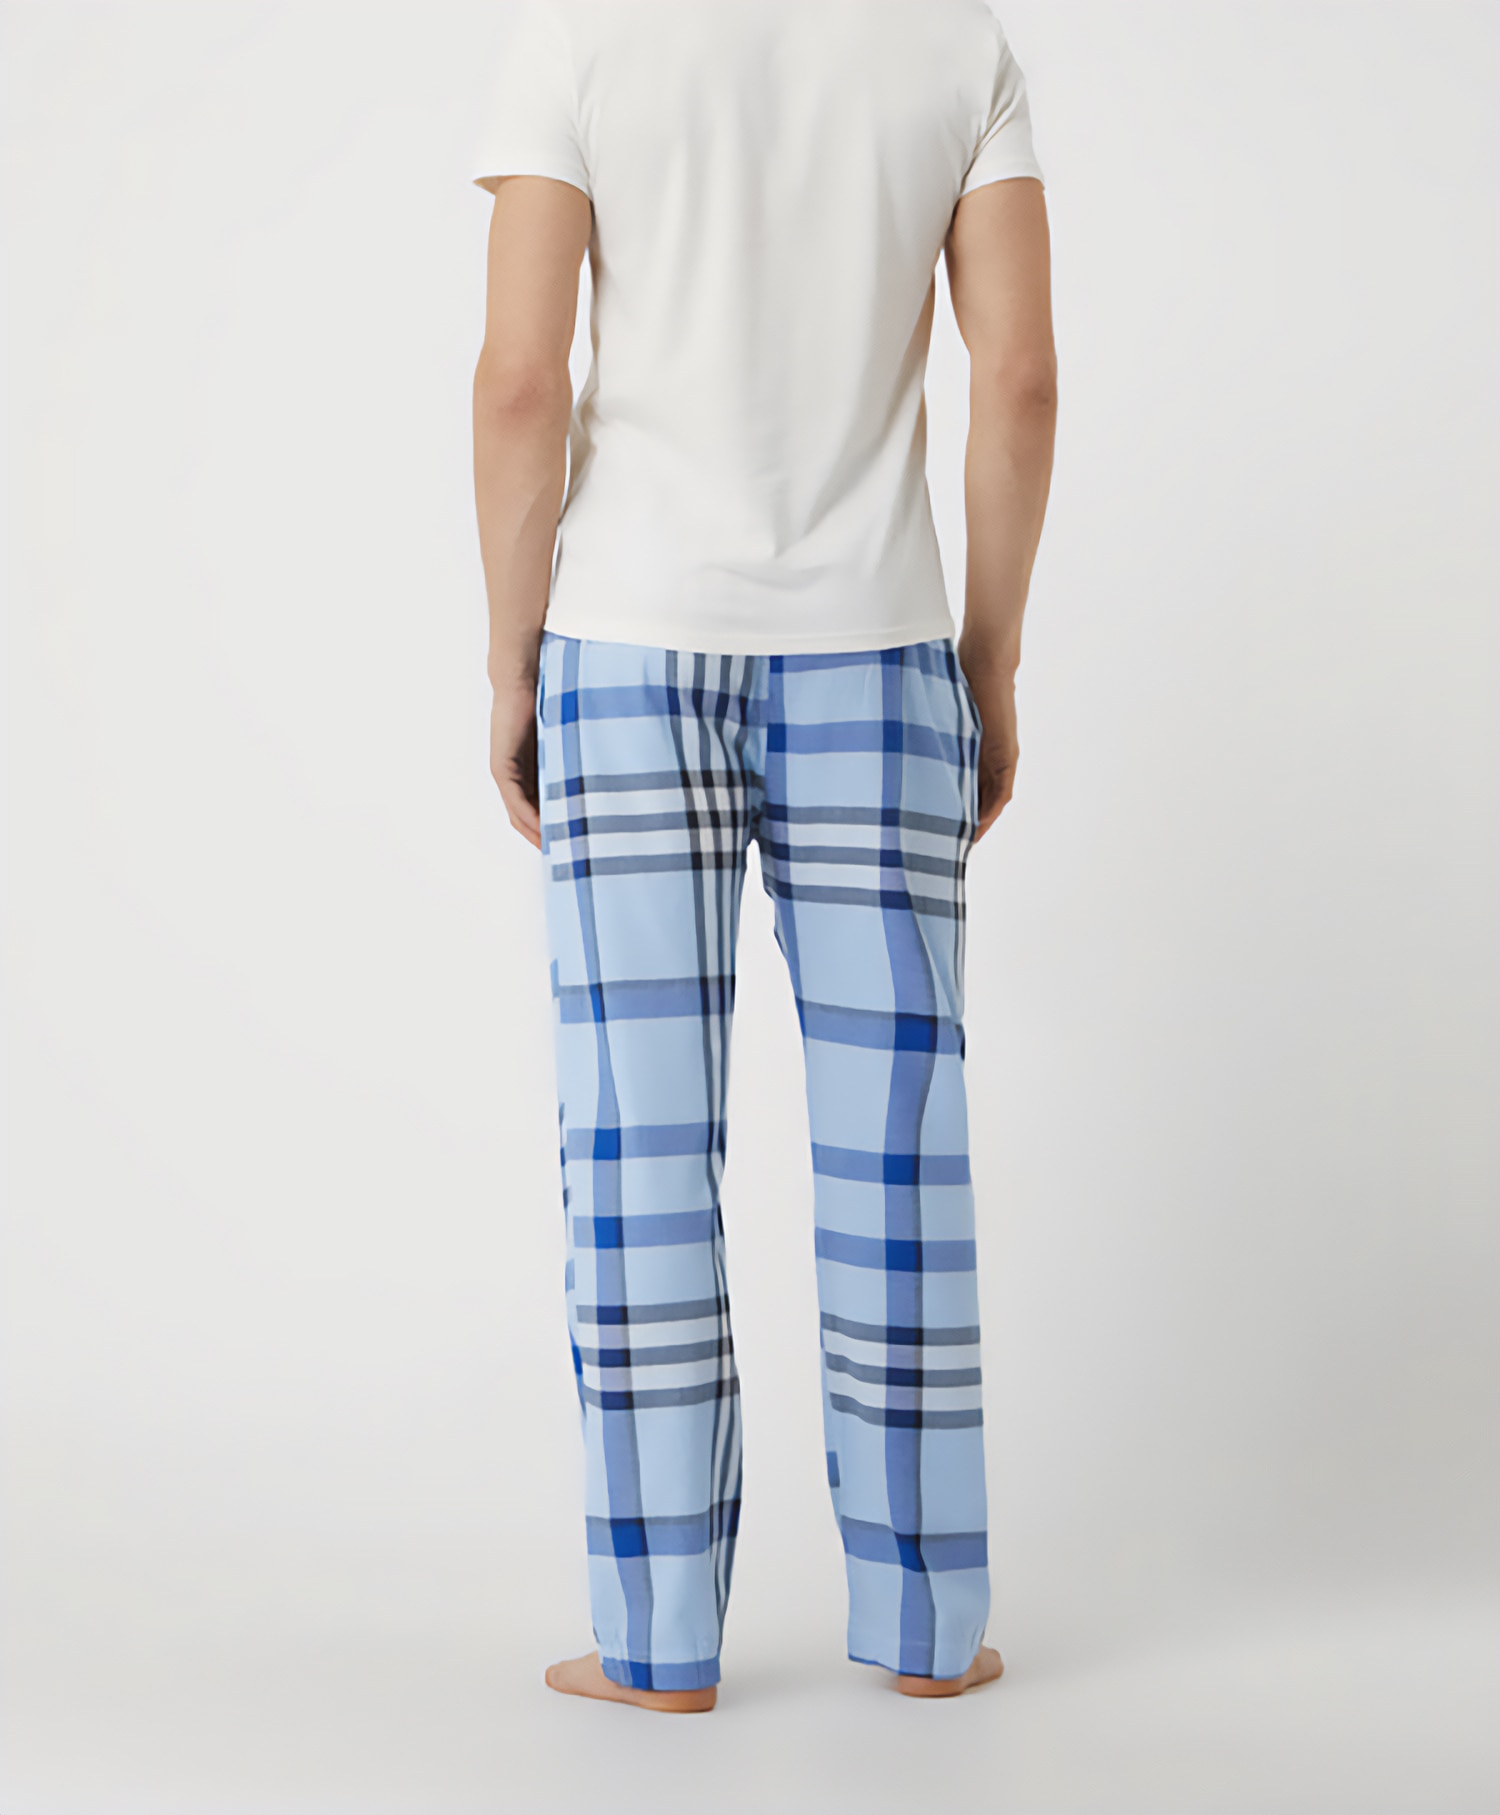 Gant Pyjamas Flannel Pant